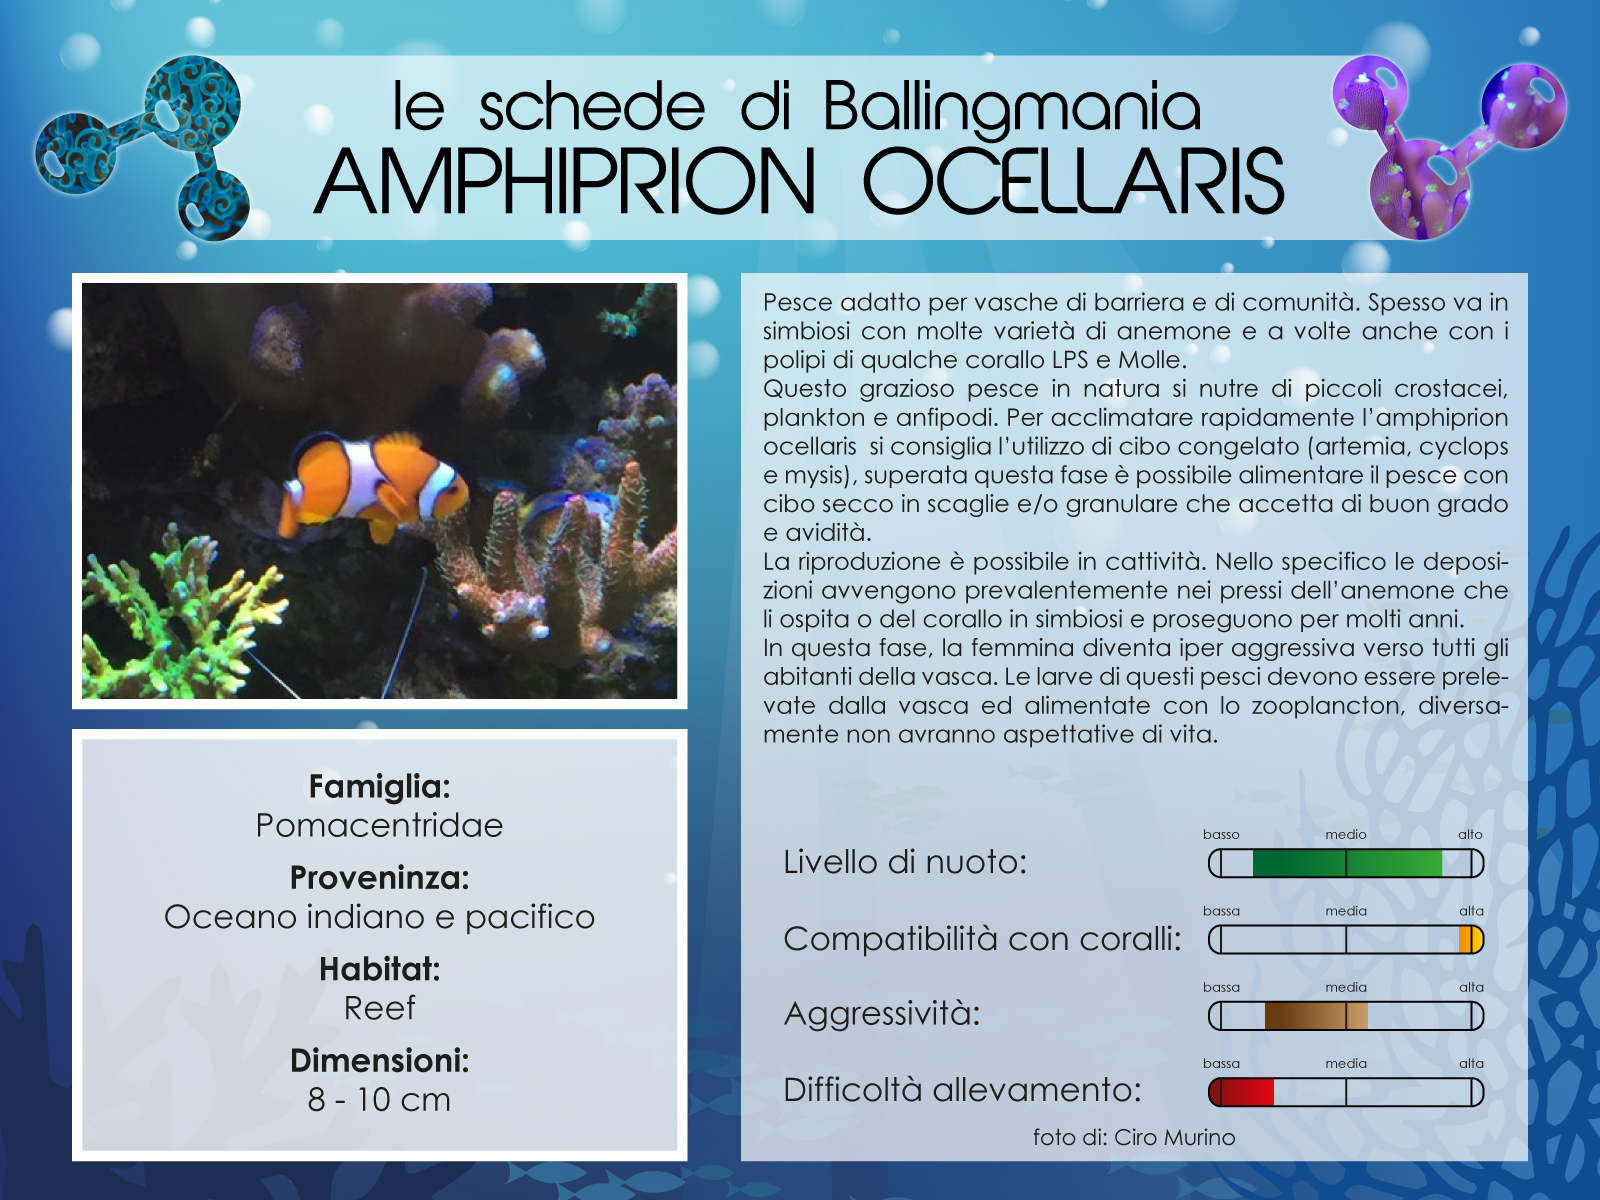 Amphiprion Ocellaris